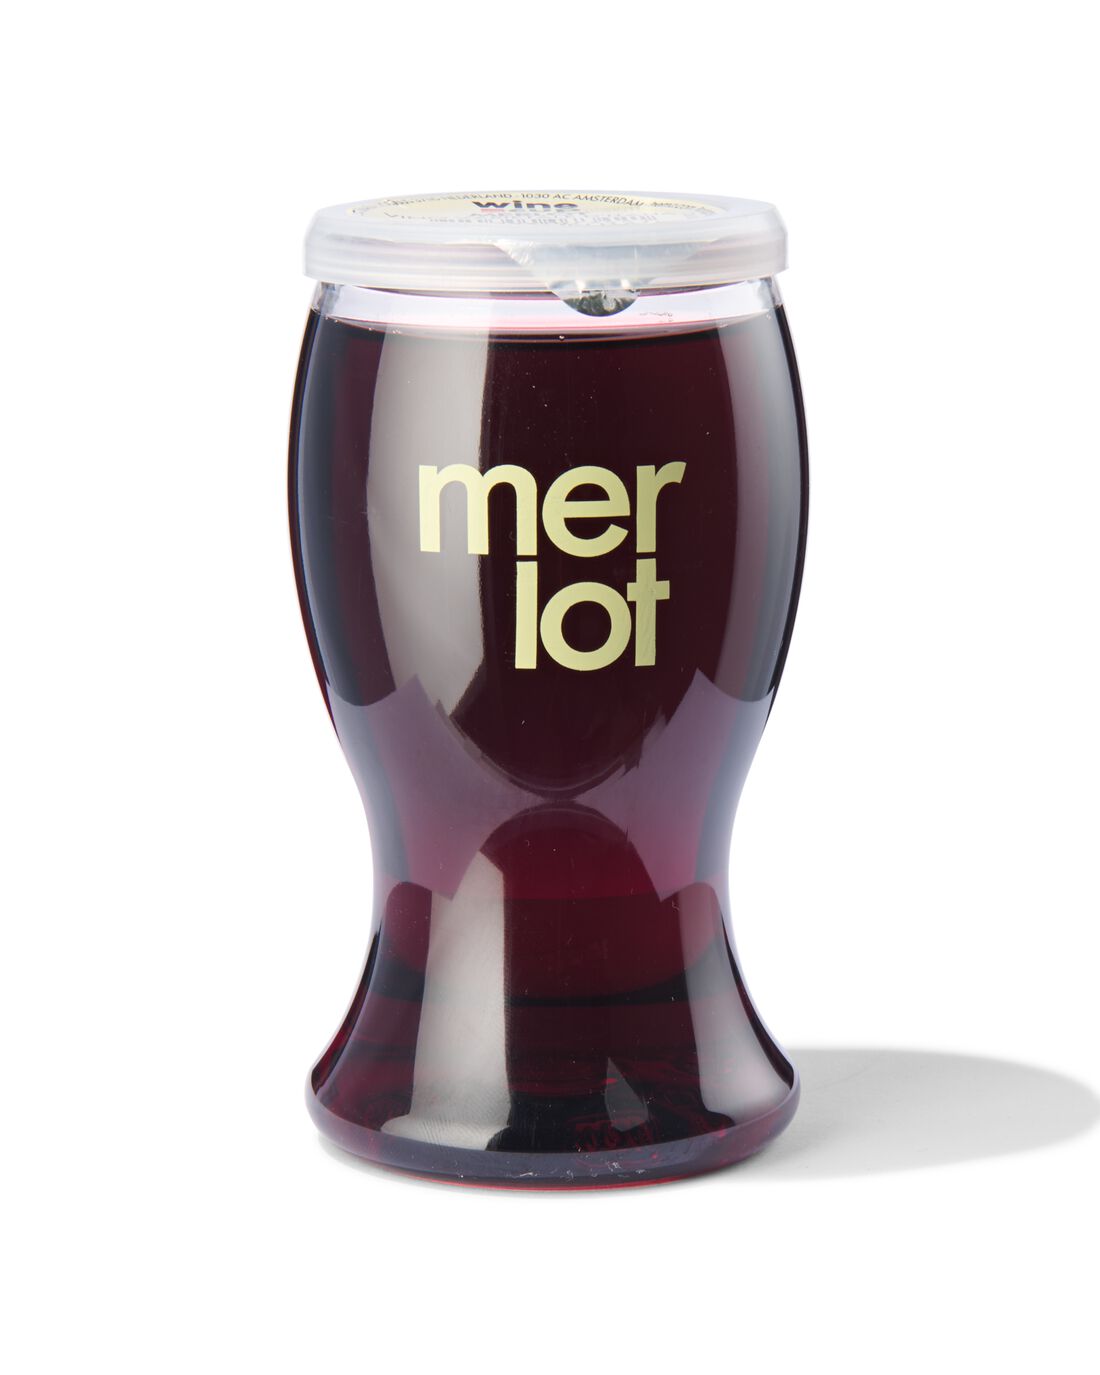 HEMA Wine In Cup Merlot 187ml